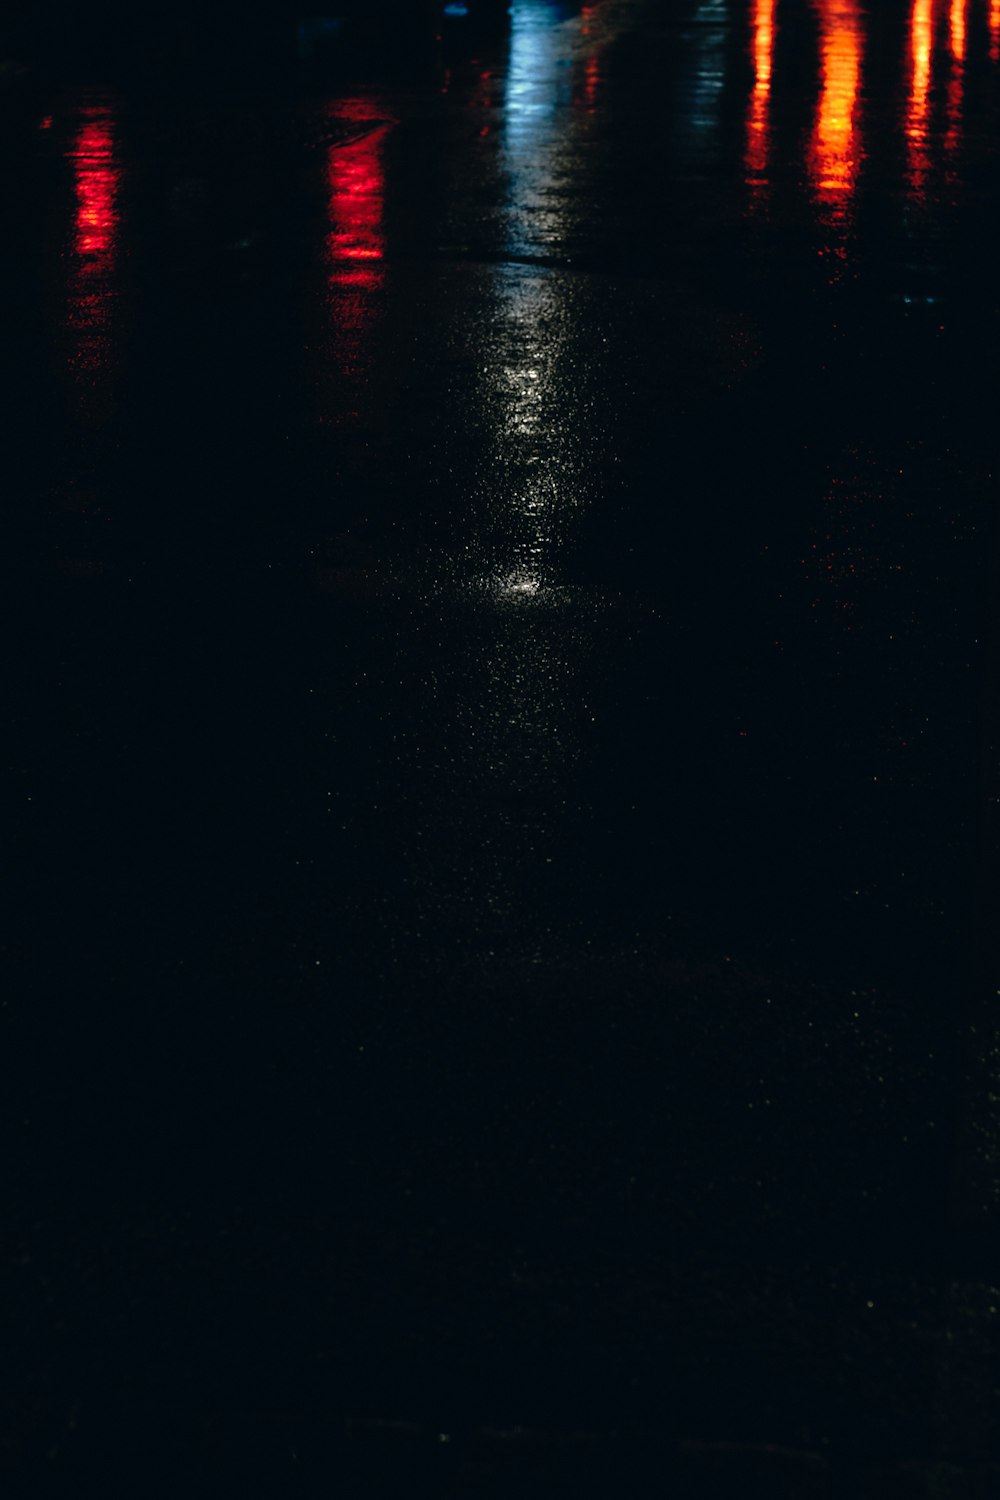 red lights on black surface